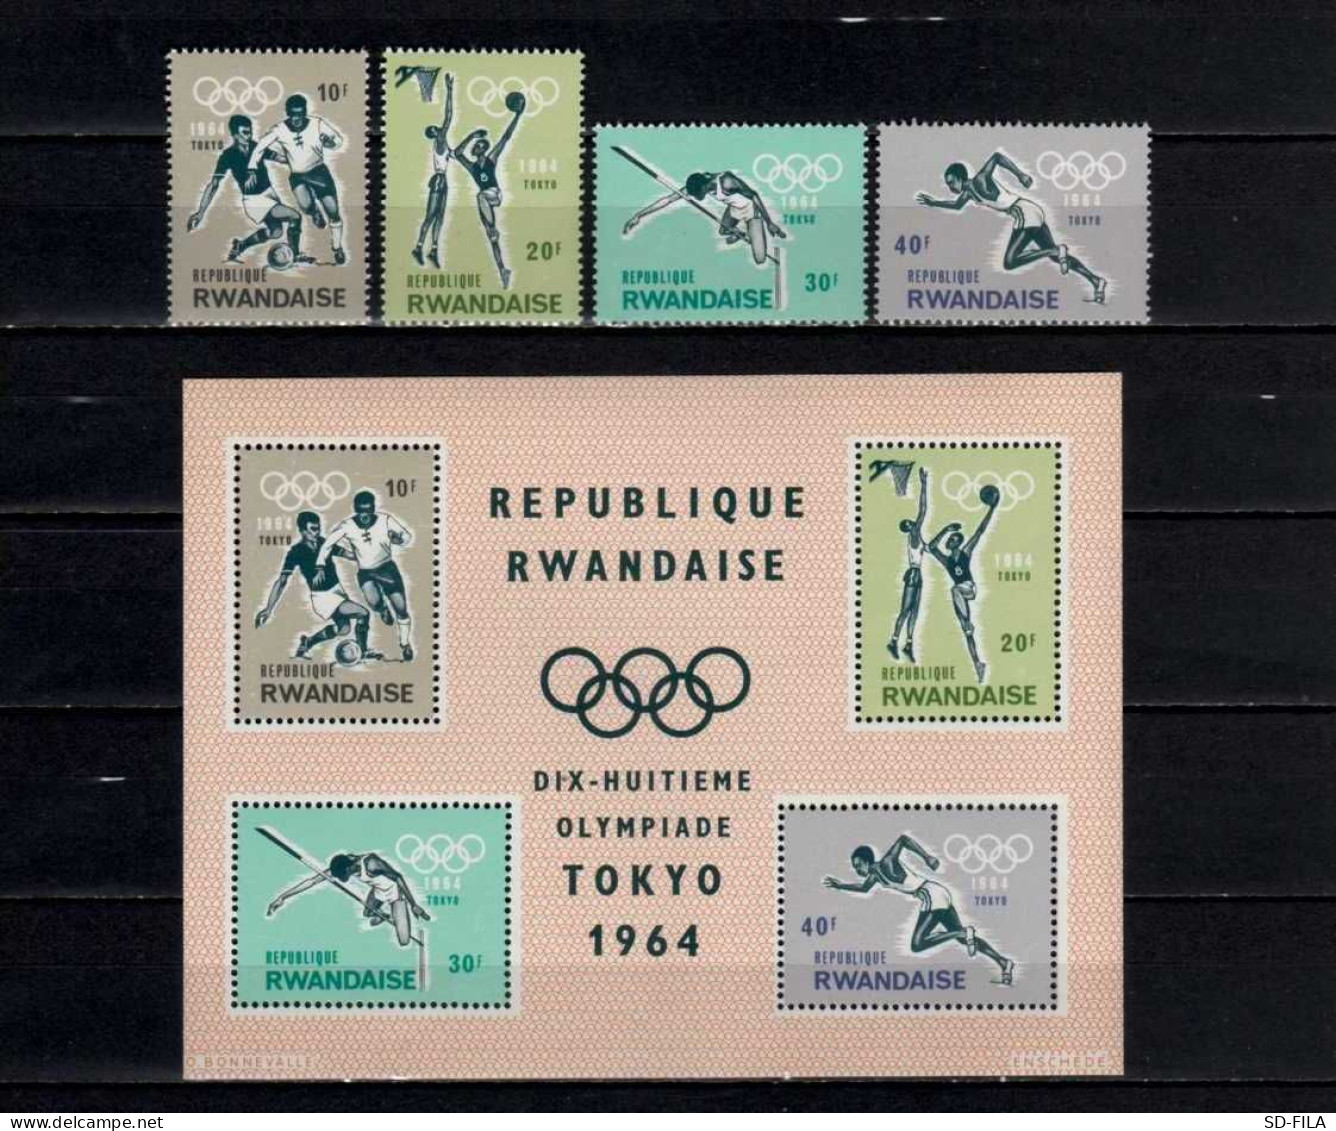 Belgian Congo - Rwanda 1964 N° 81A/82C + BL2 MNH Olympic Games - Jeux Olympique Tokio - Japan C15.00Eu. - Nuevos